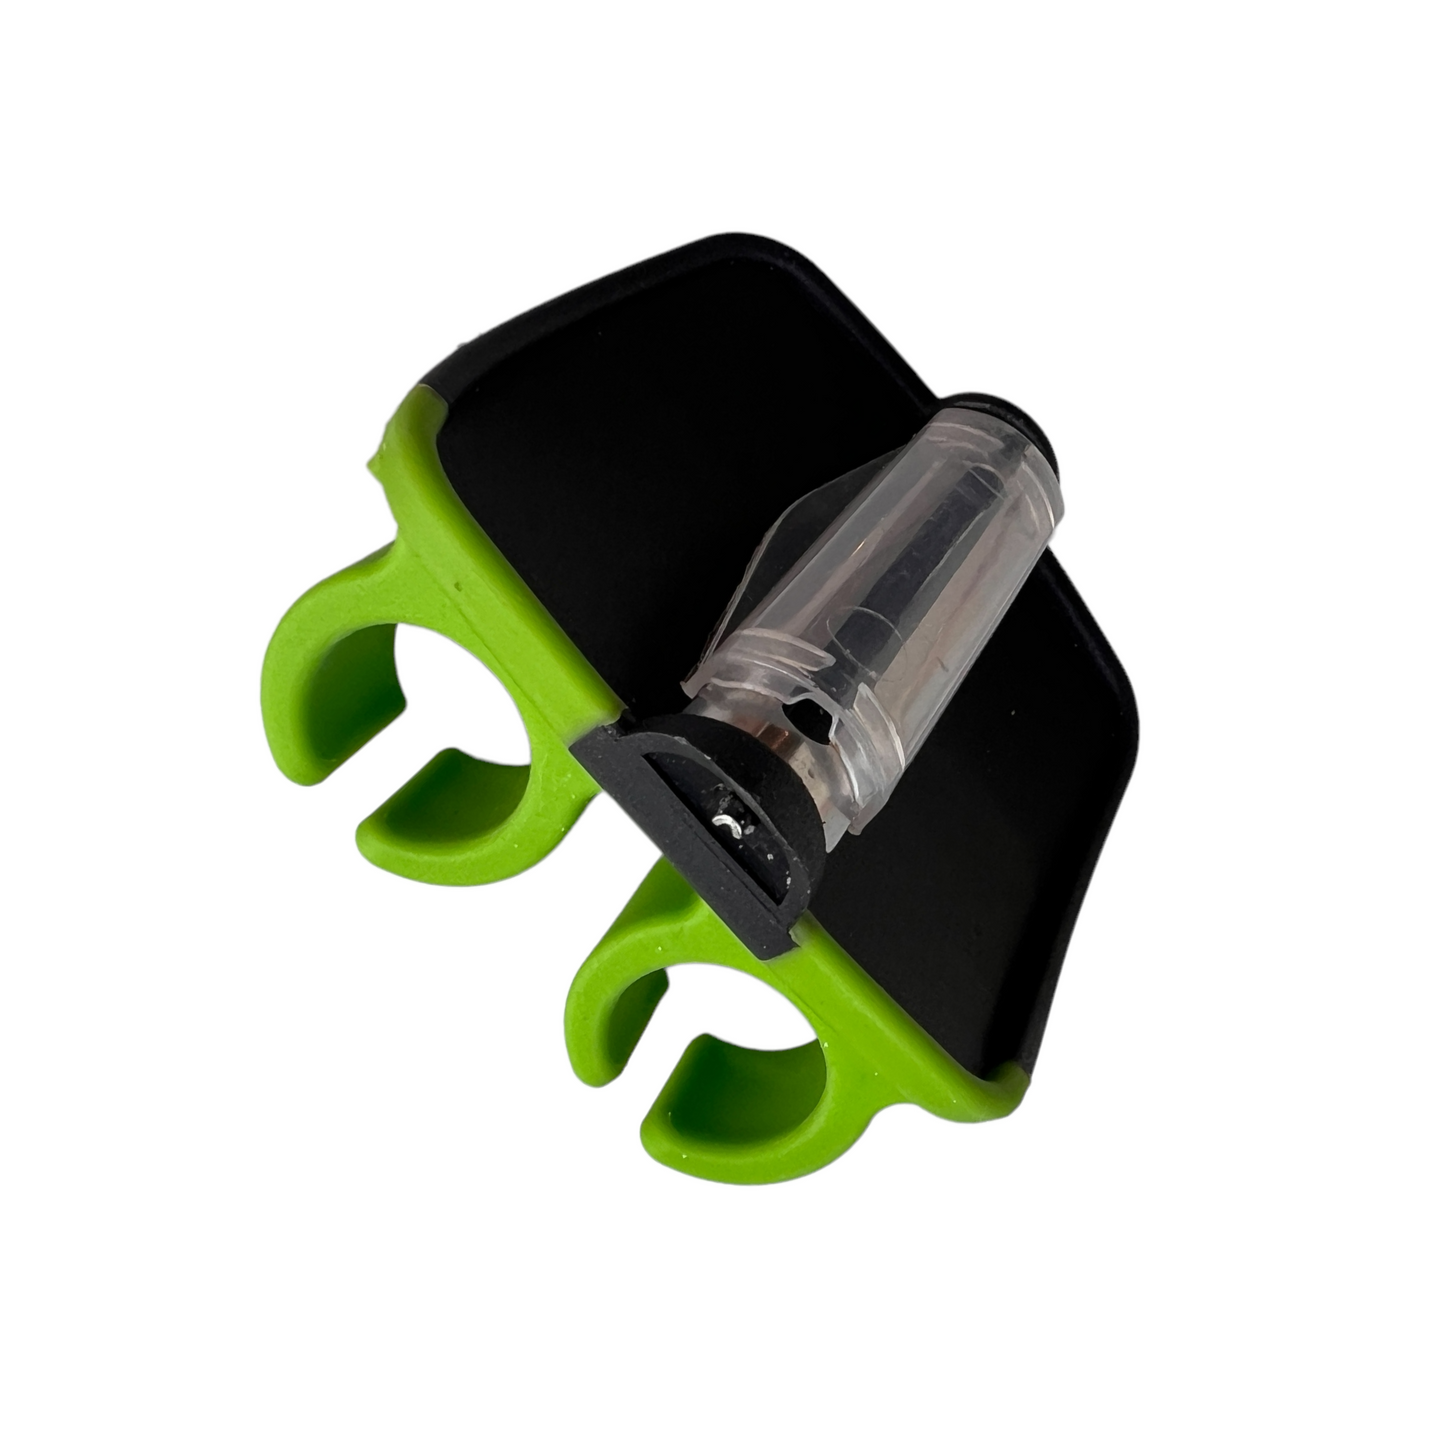 Easy Hand Peeler Accessibility Equipment SPIRIT SPARKPLUGS Green  